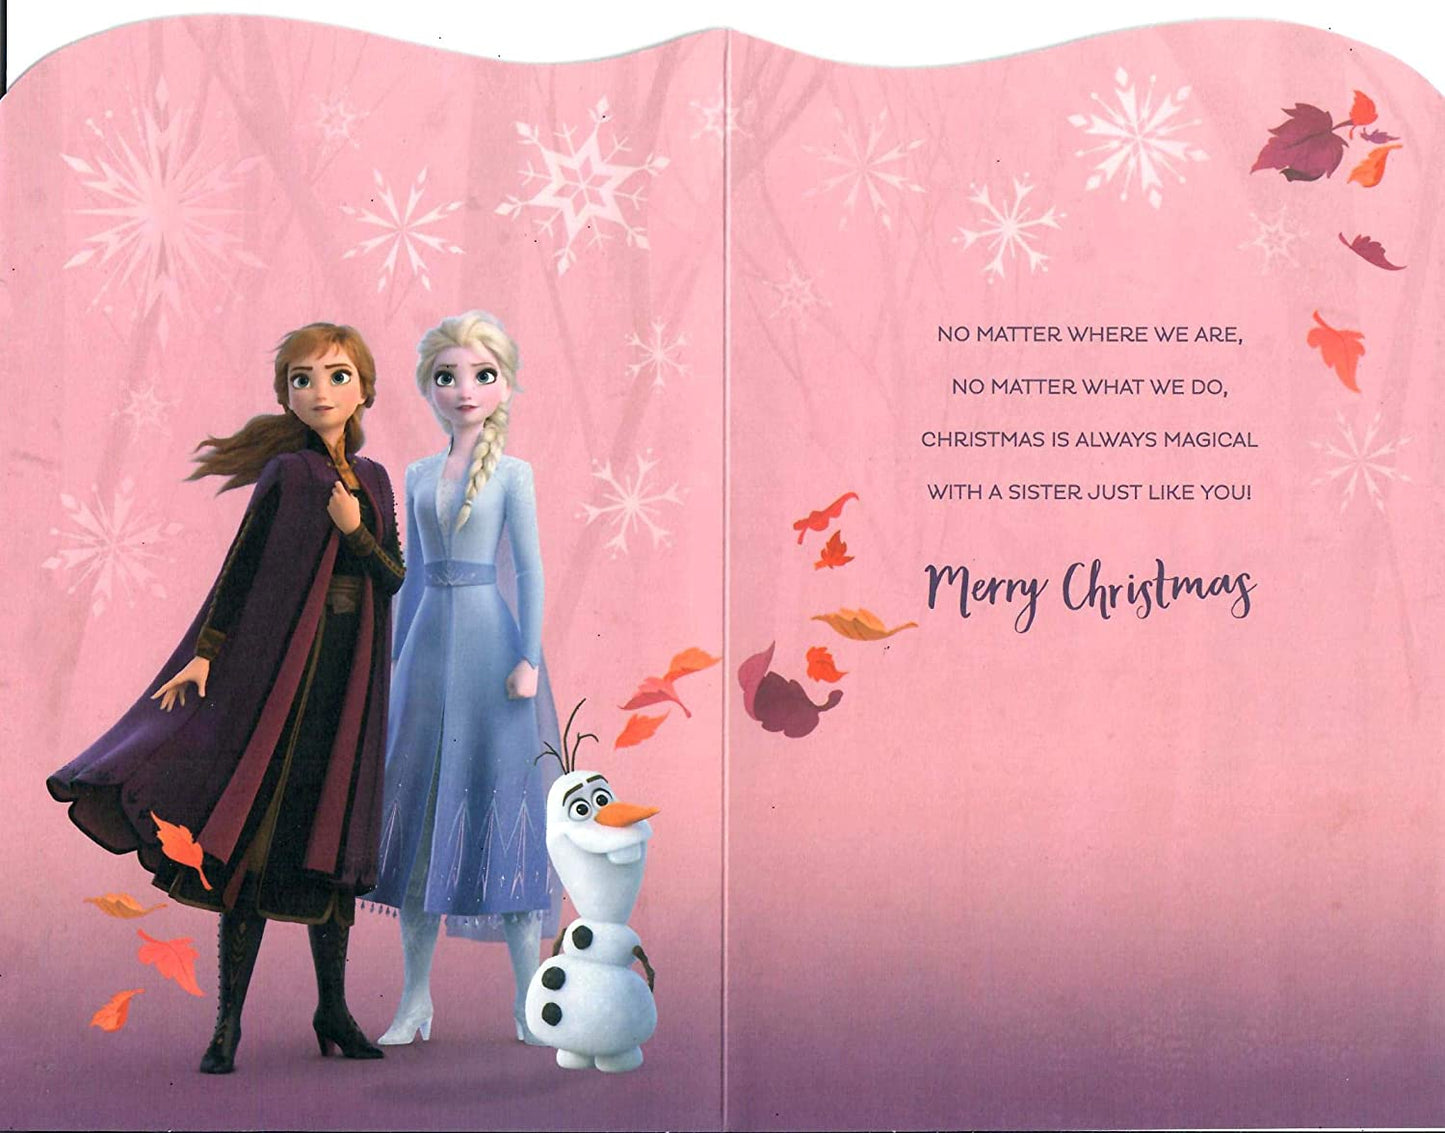 Special Sister Frozen Disney Princess Anna Glitter Christmas Card 